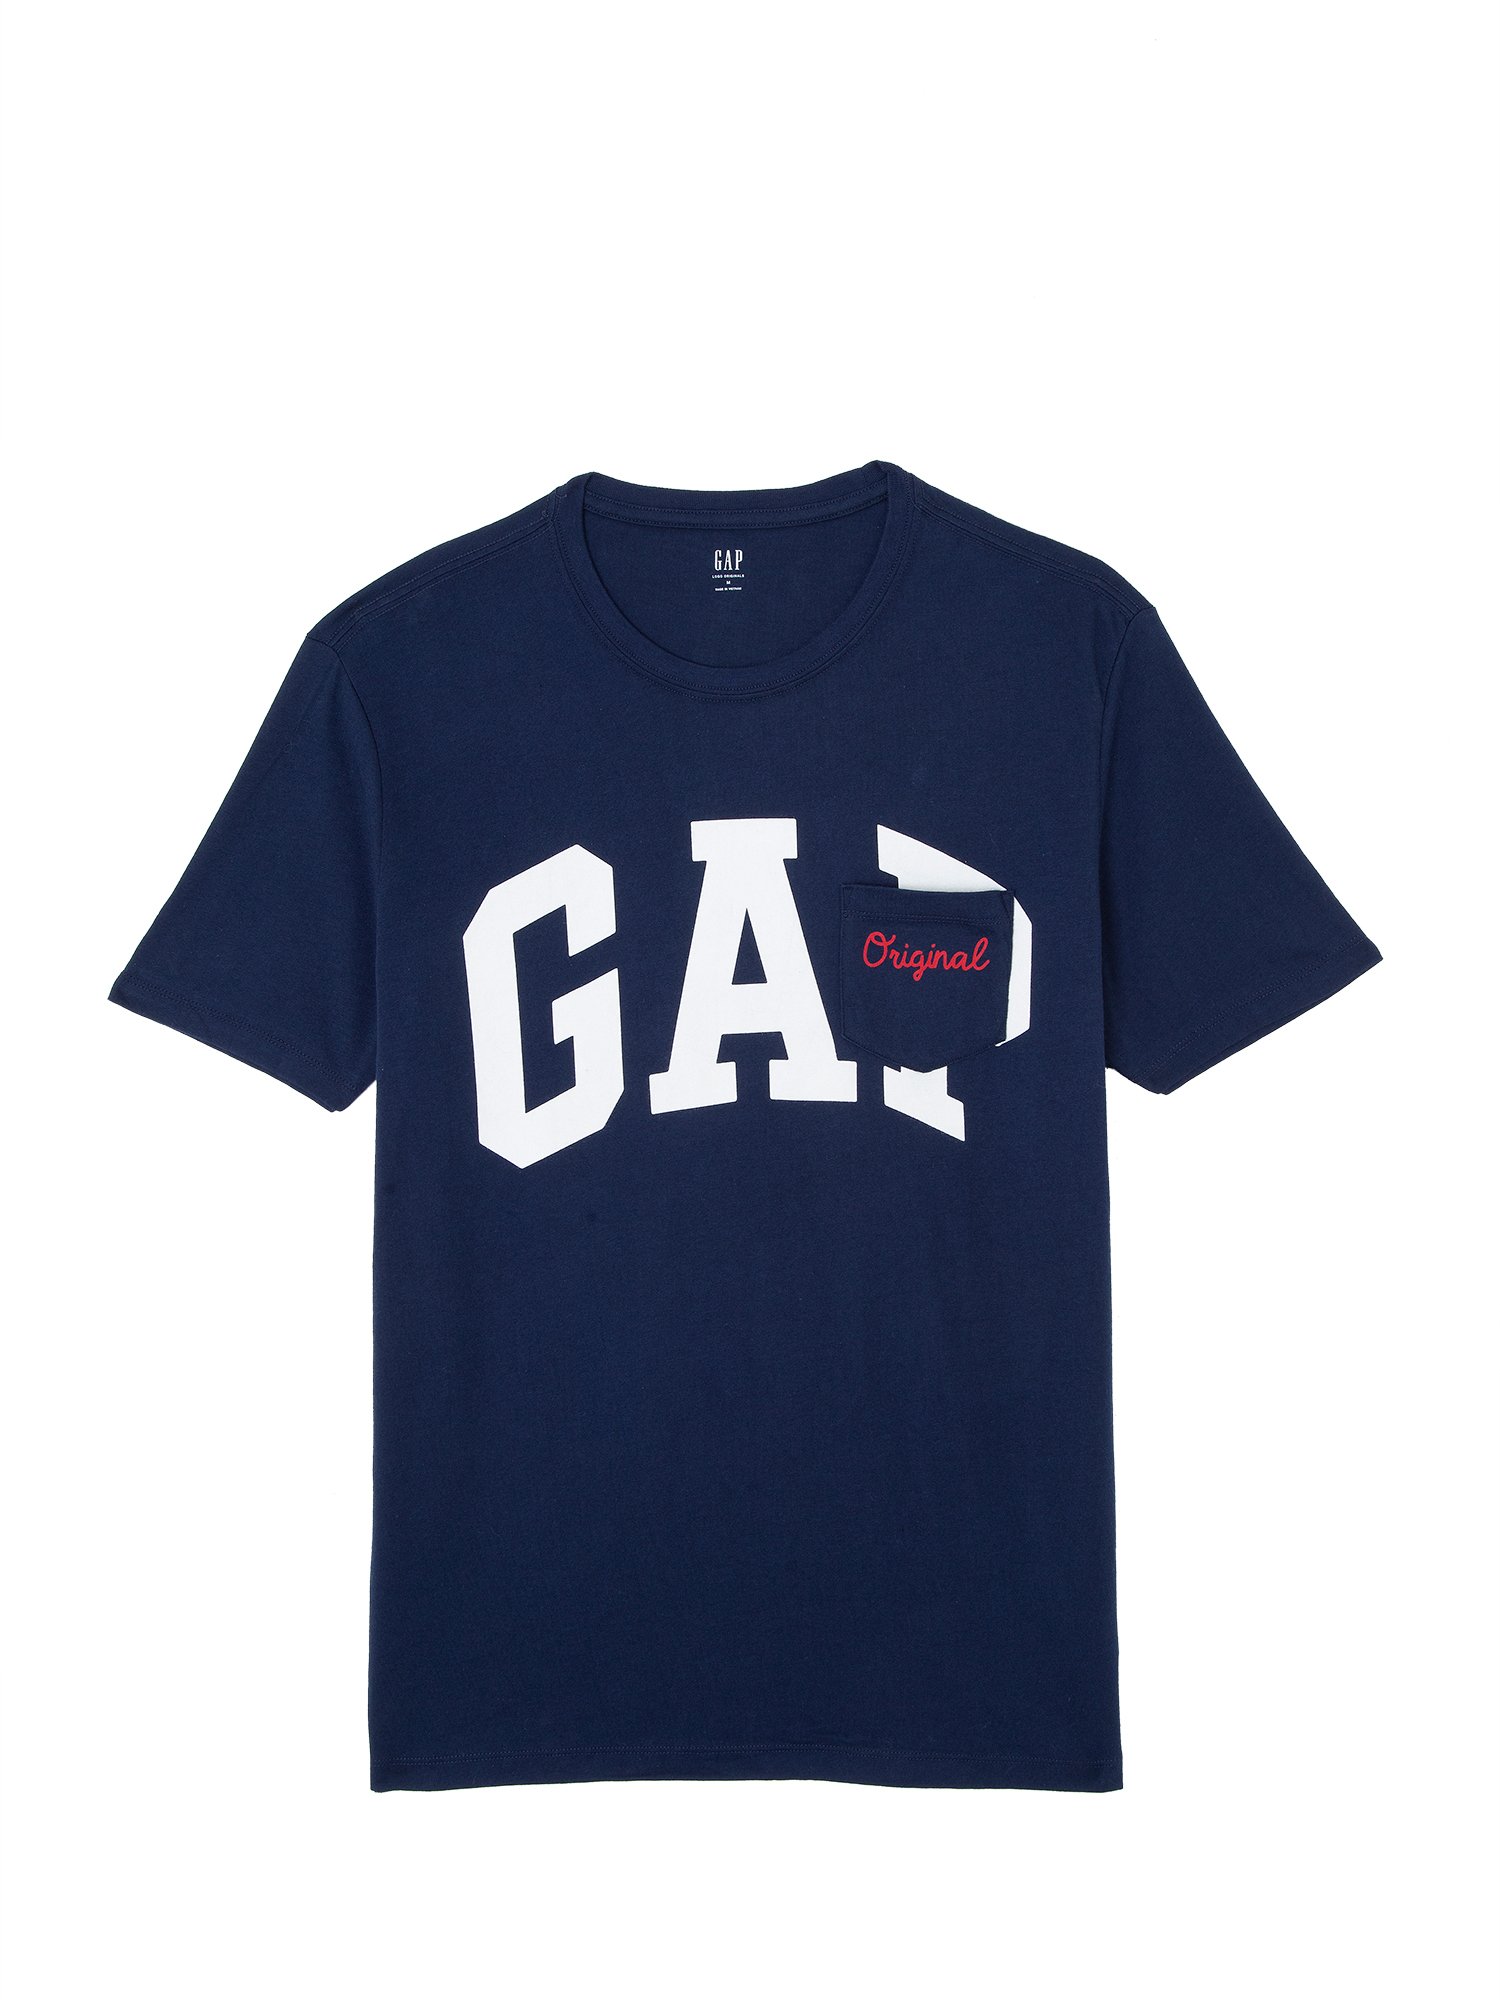 Gap Originals Remix Kısa Kollu T-Shirt product image